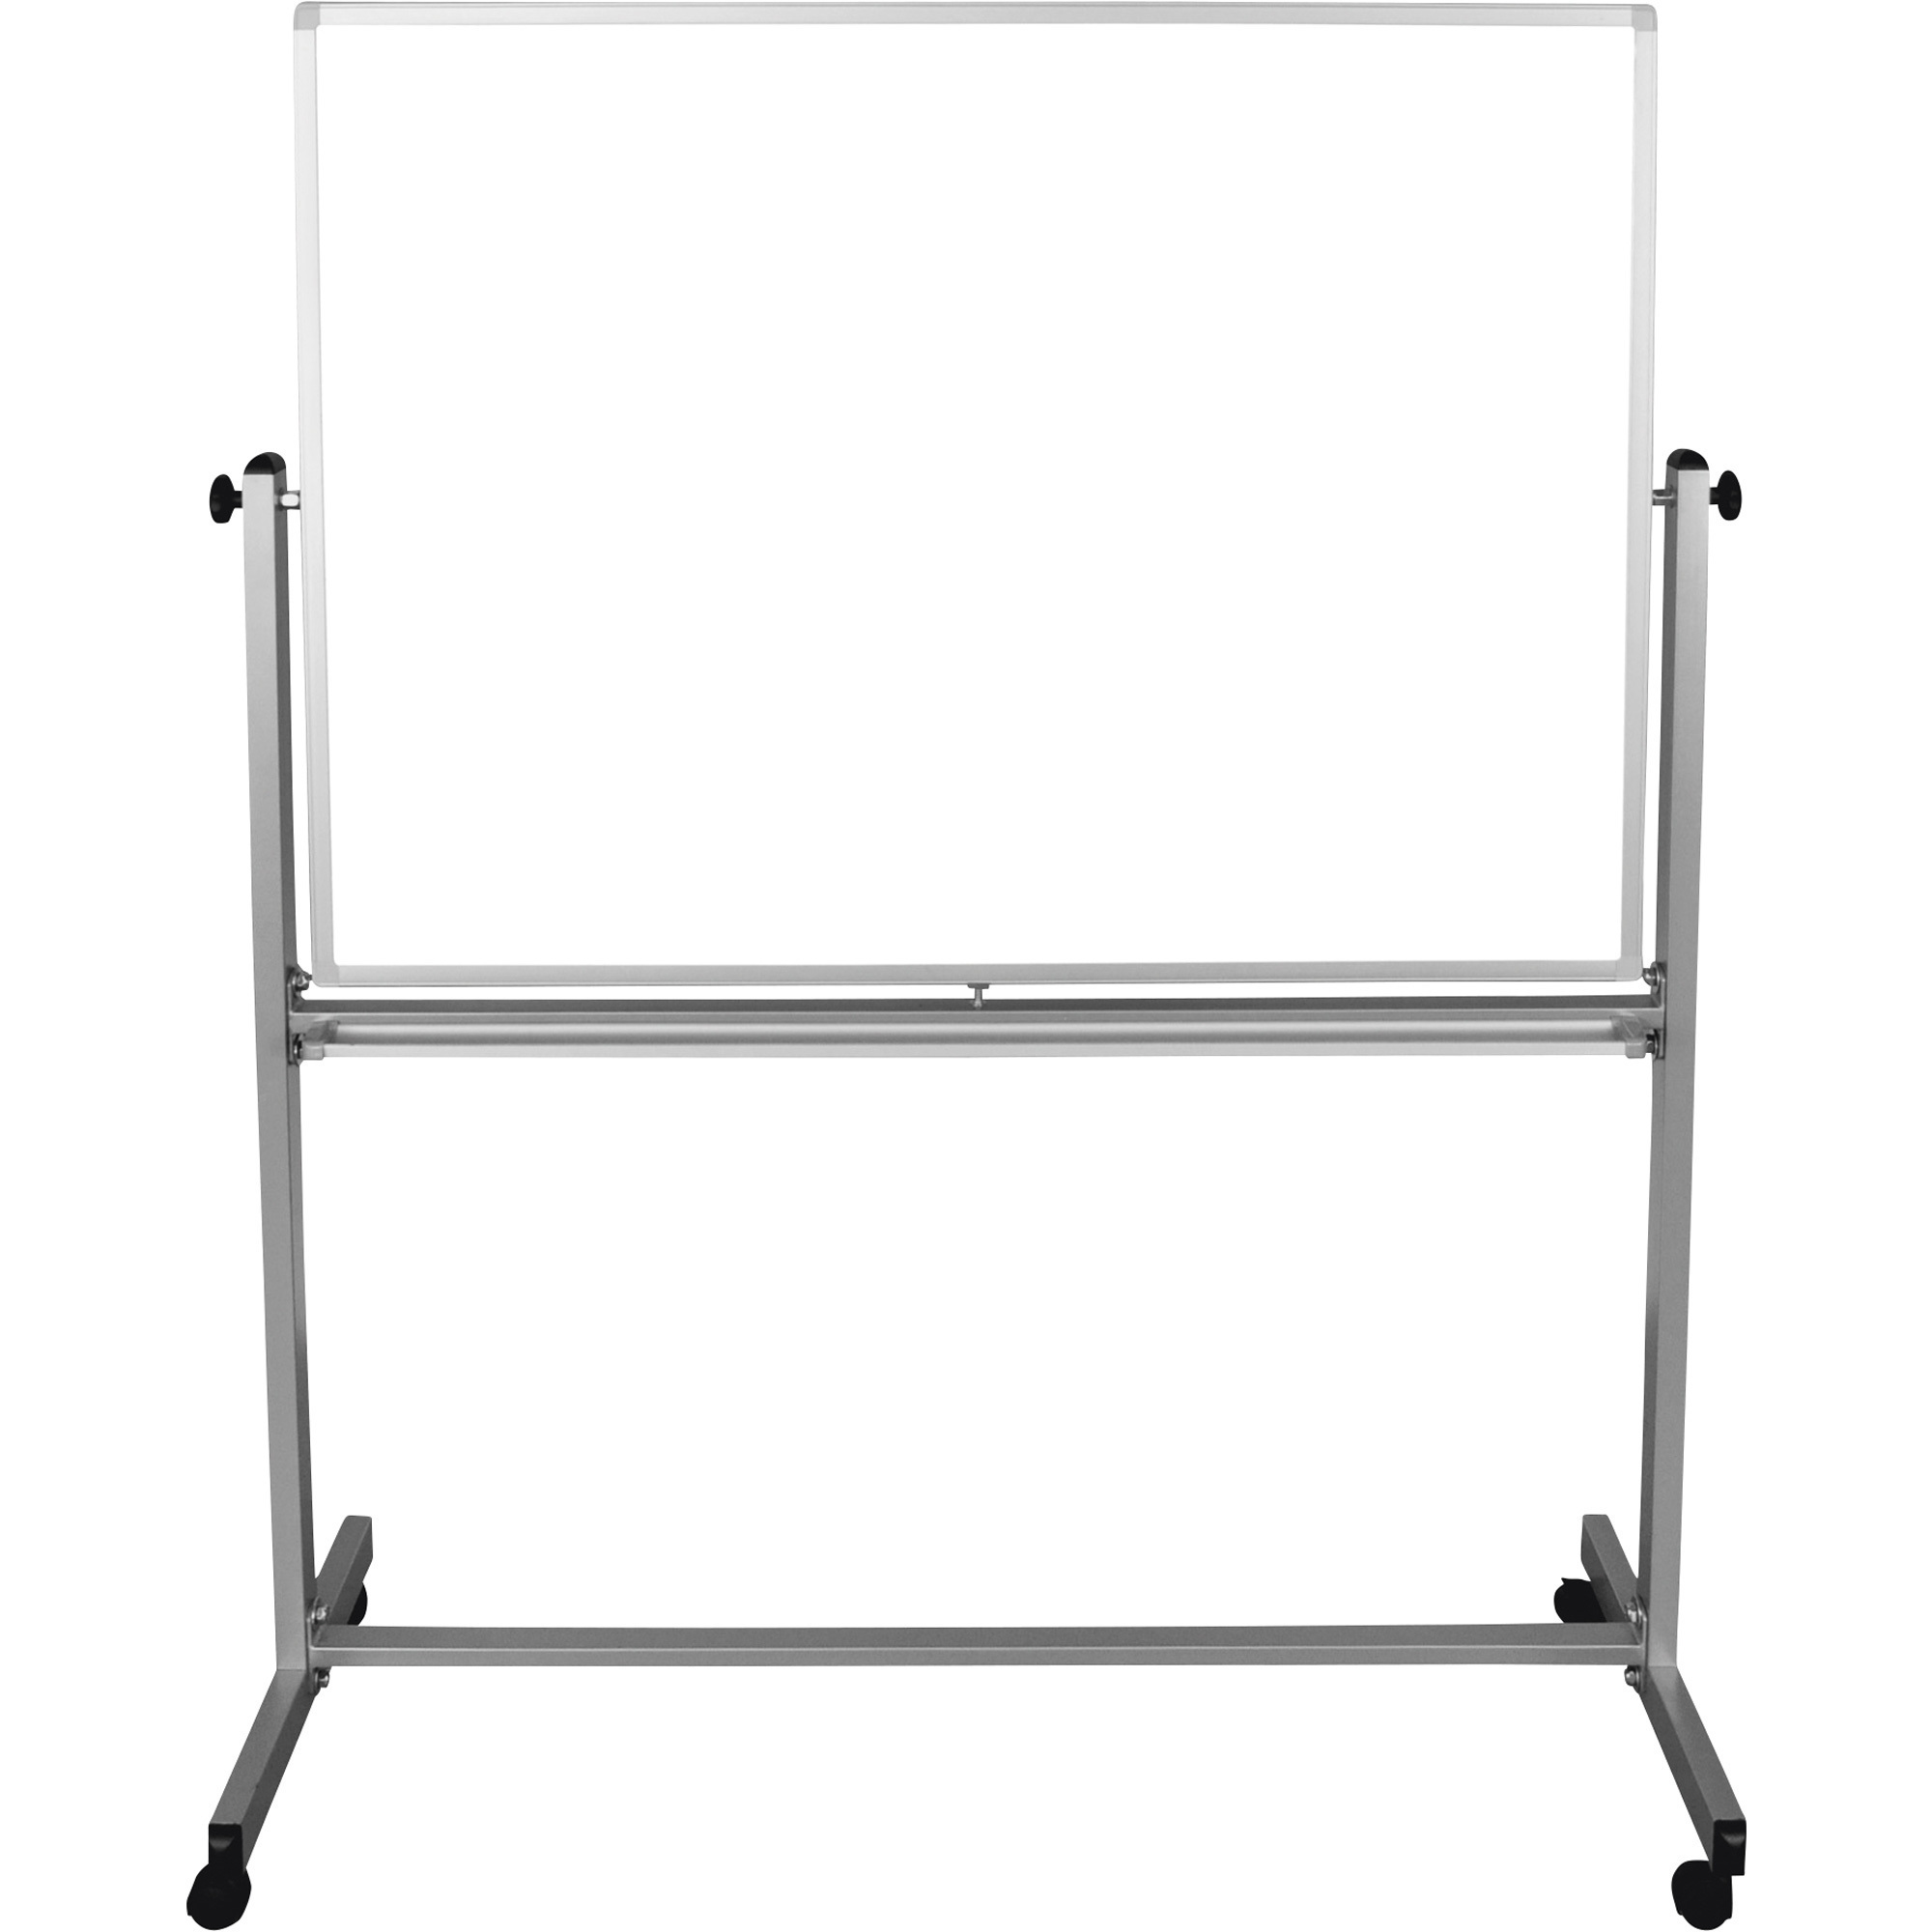 Double-Sided Whiteboard — Grey/White, 51 1/2Inch W x 20 1/2Inch D x 65 1/2Inch H, Model - Luxor MB4836WW